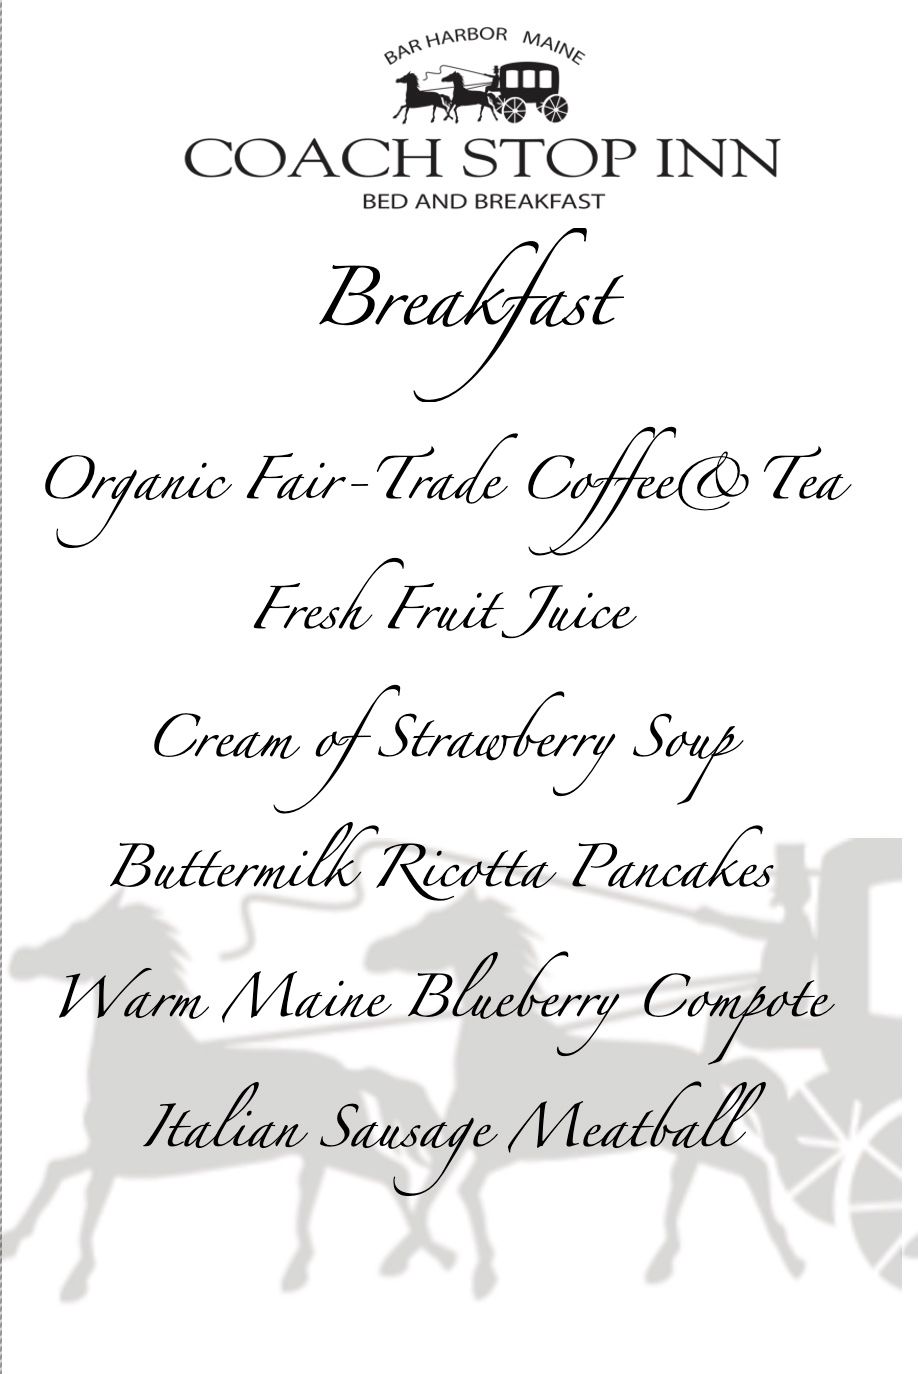 Breakfast menu at coach Stop Inn Bed and Breakfast